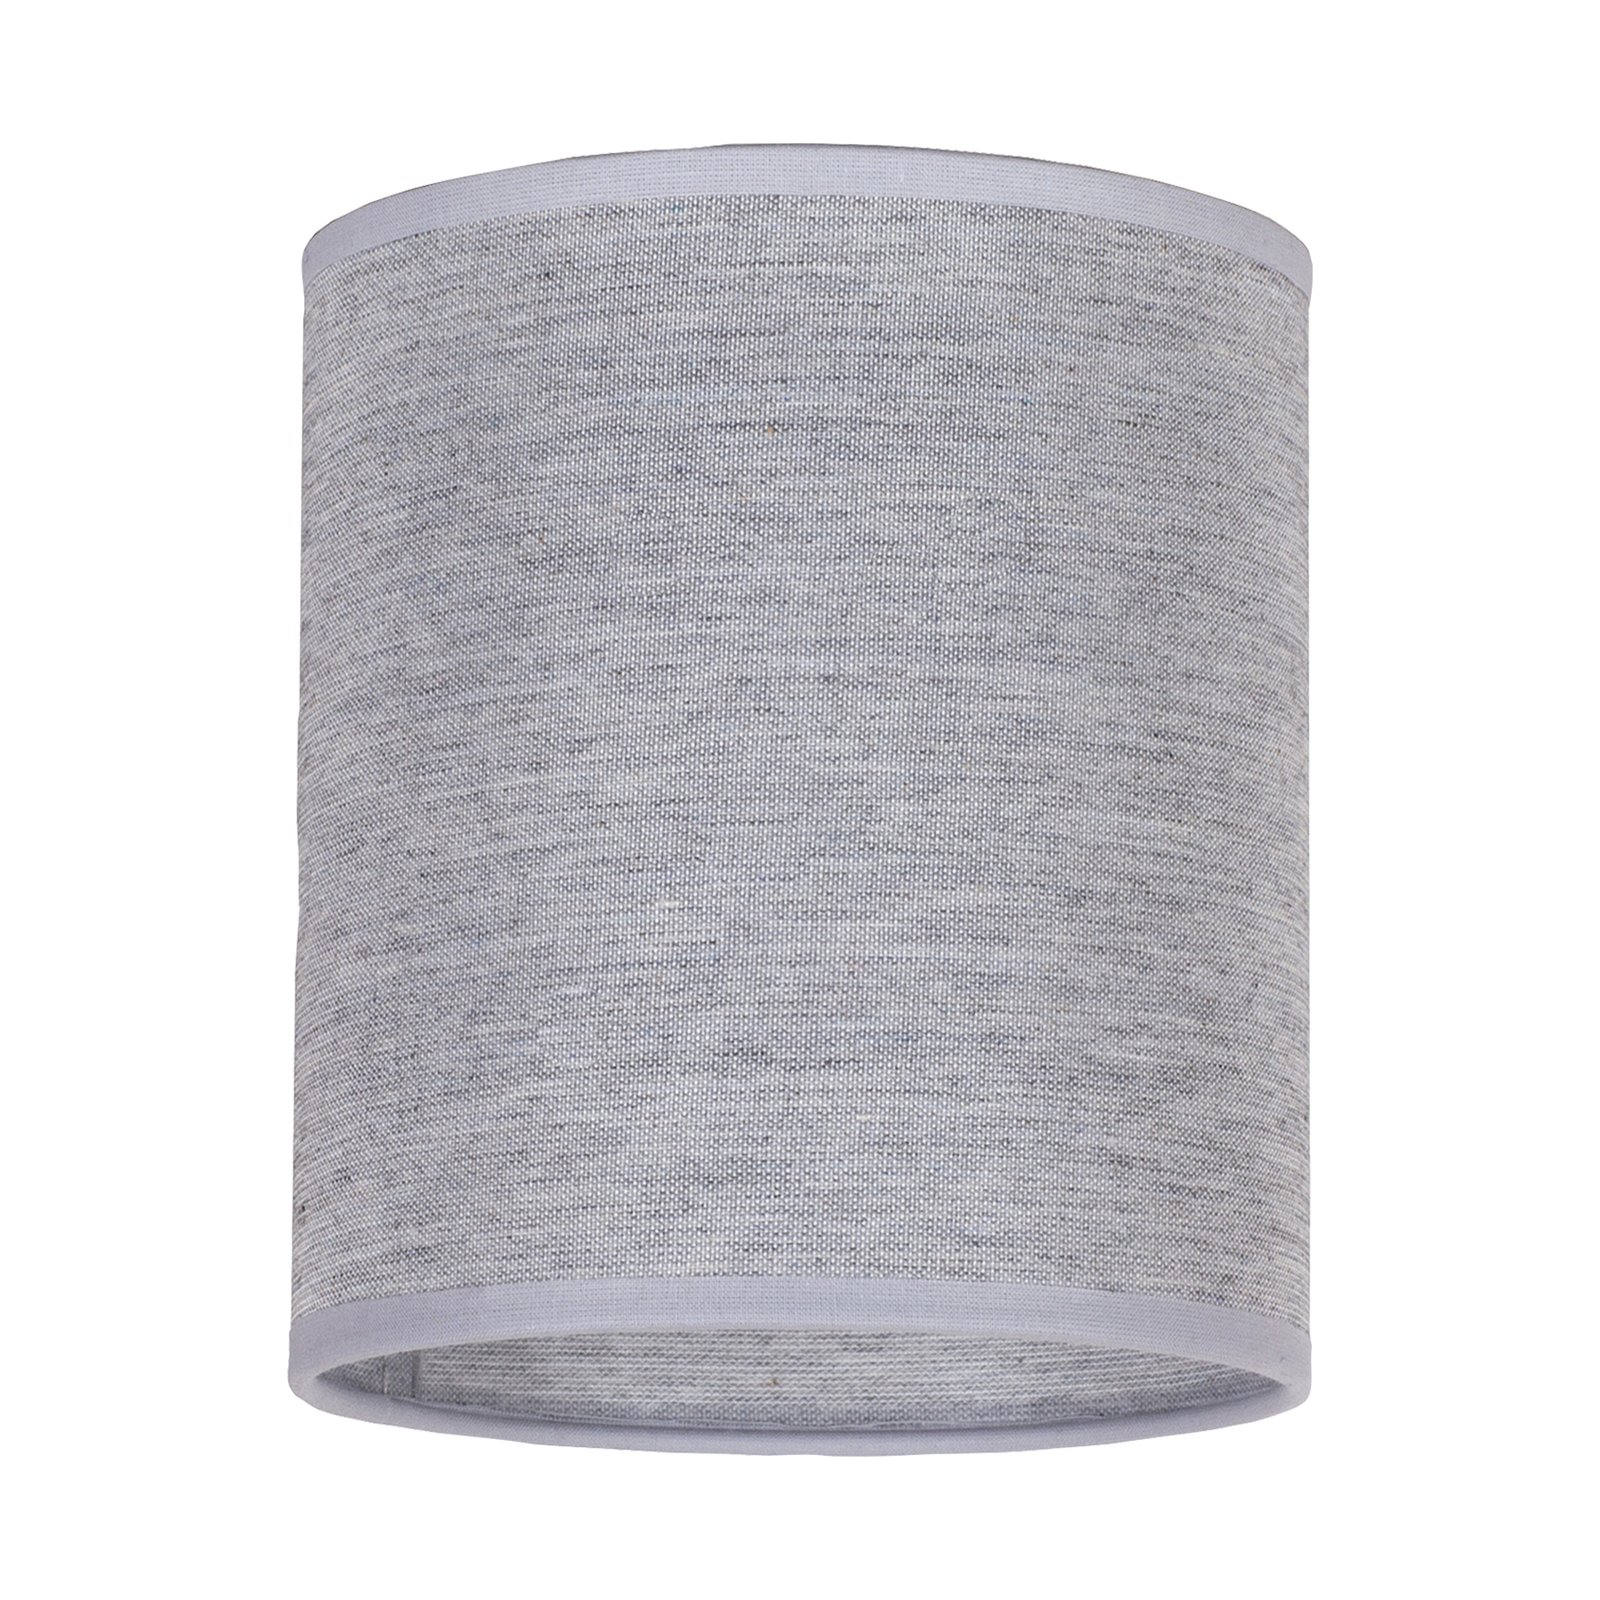 Roller lampshade, grey, Ø 13 cm, height 15 cm